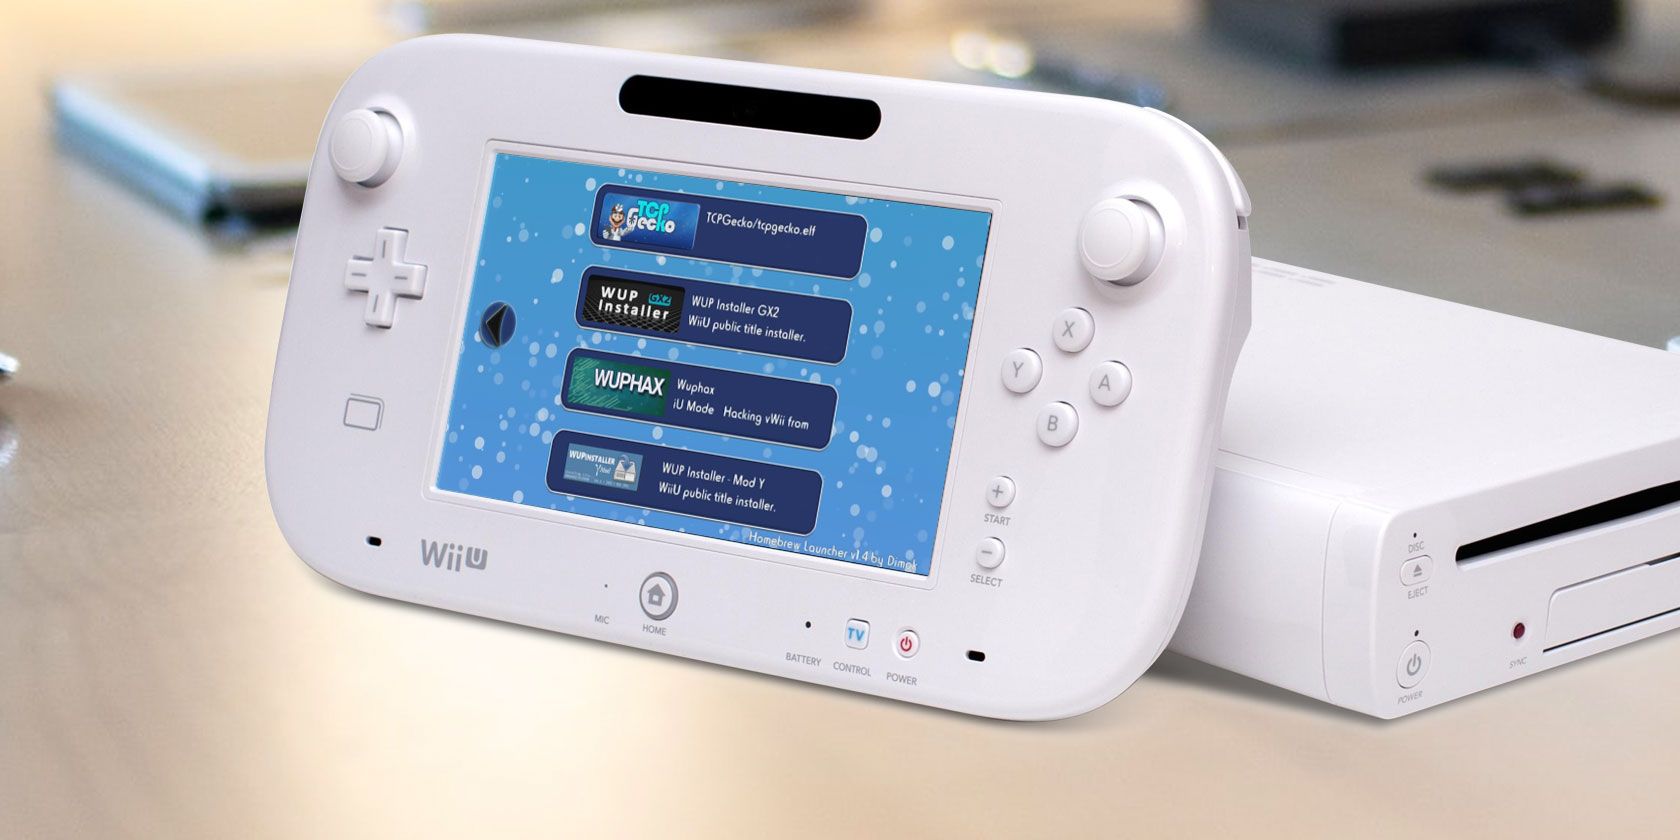 Spijsverteringsorgaan Naar de waarheid inhoudsopgave How to Make Your Wii U Useful Again With Homebrew